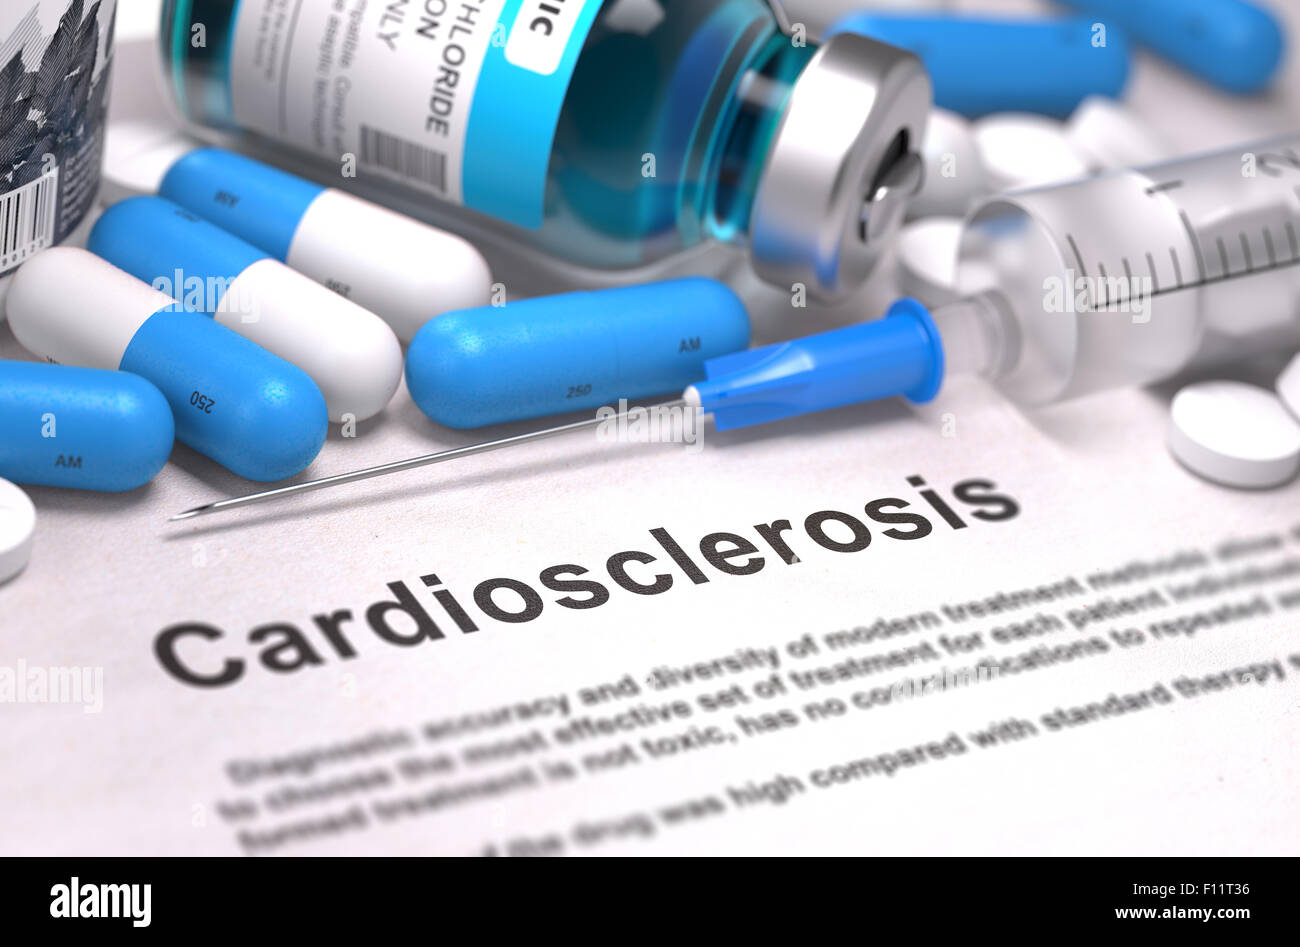 Diagnosi Cardiosclerosis. Concetto medico. Foto Stock